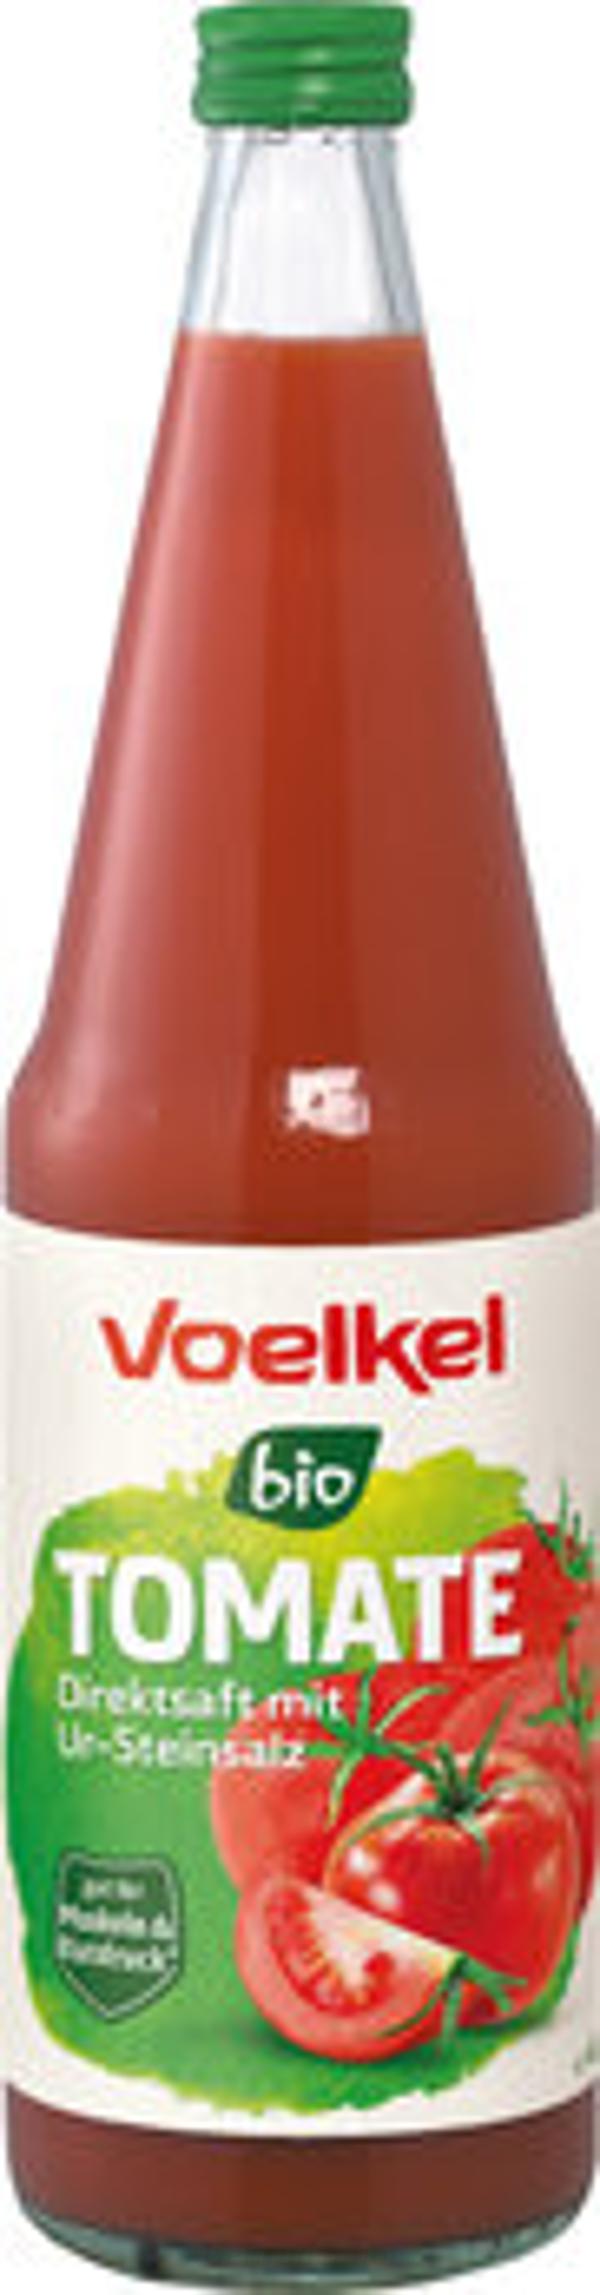 Produktfoto zu Tomatensaft 0,7 l (VOE)